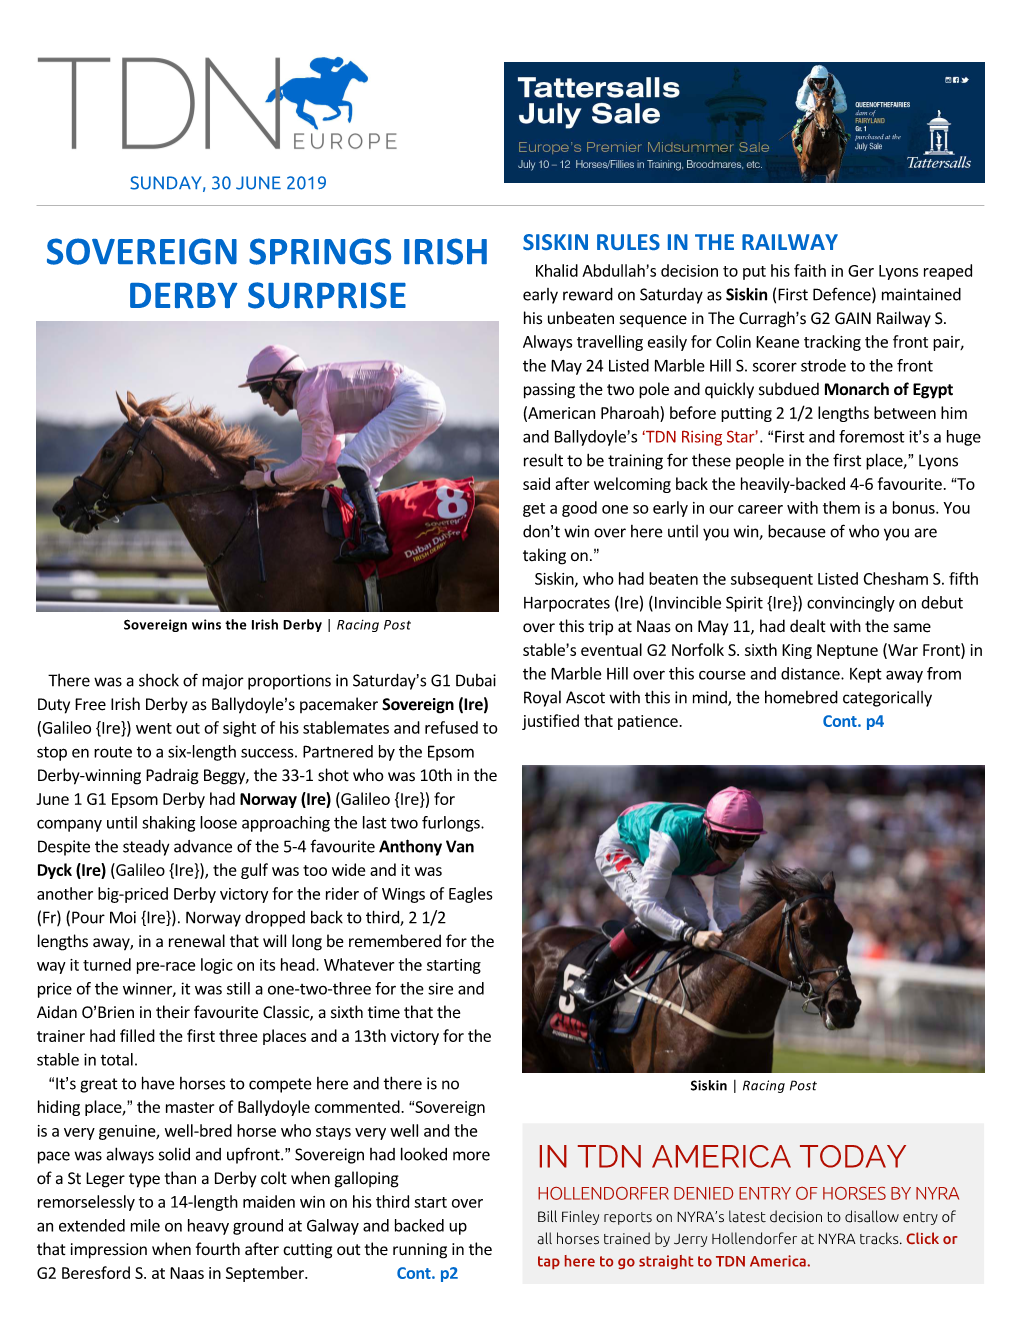 Sovereign Springs Irish Derby Surprise